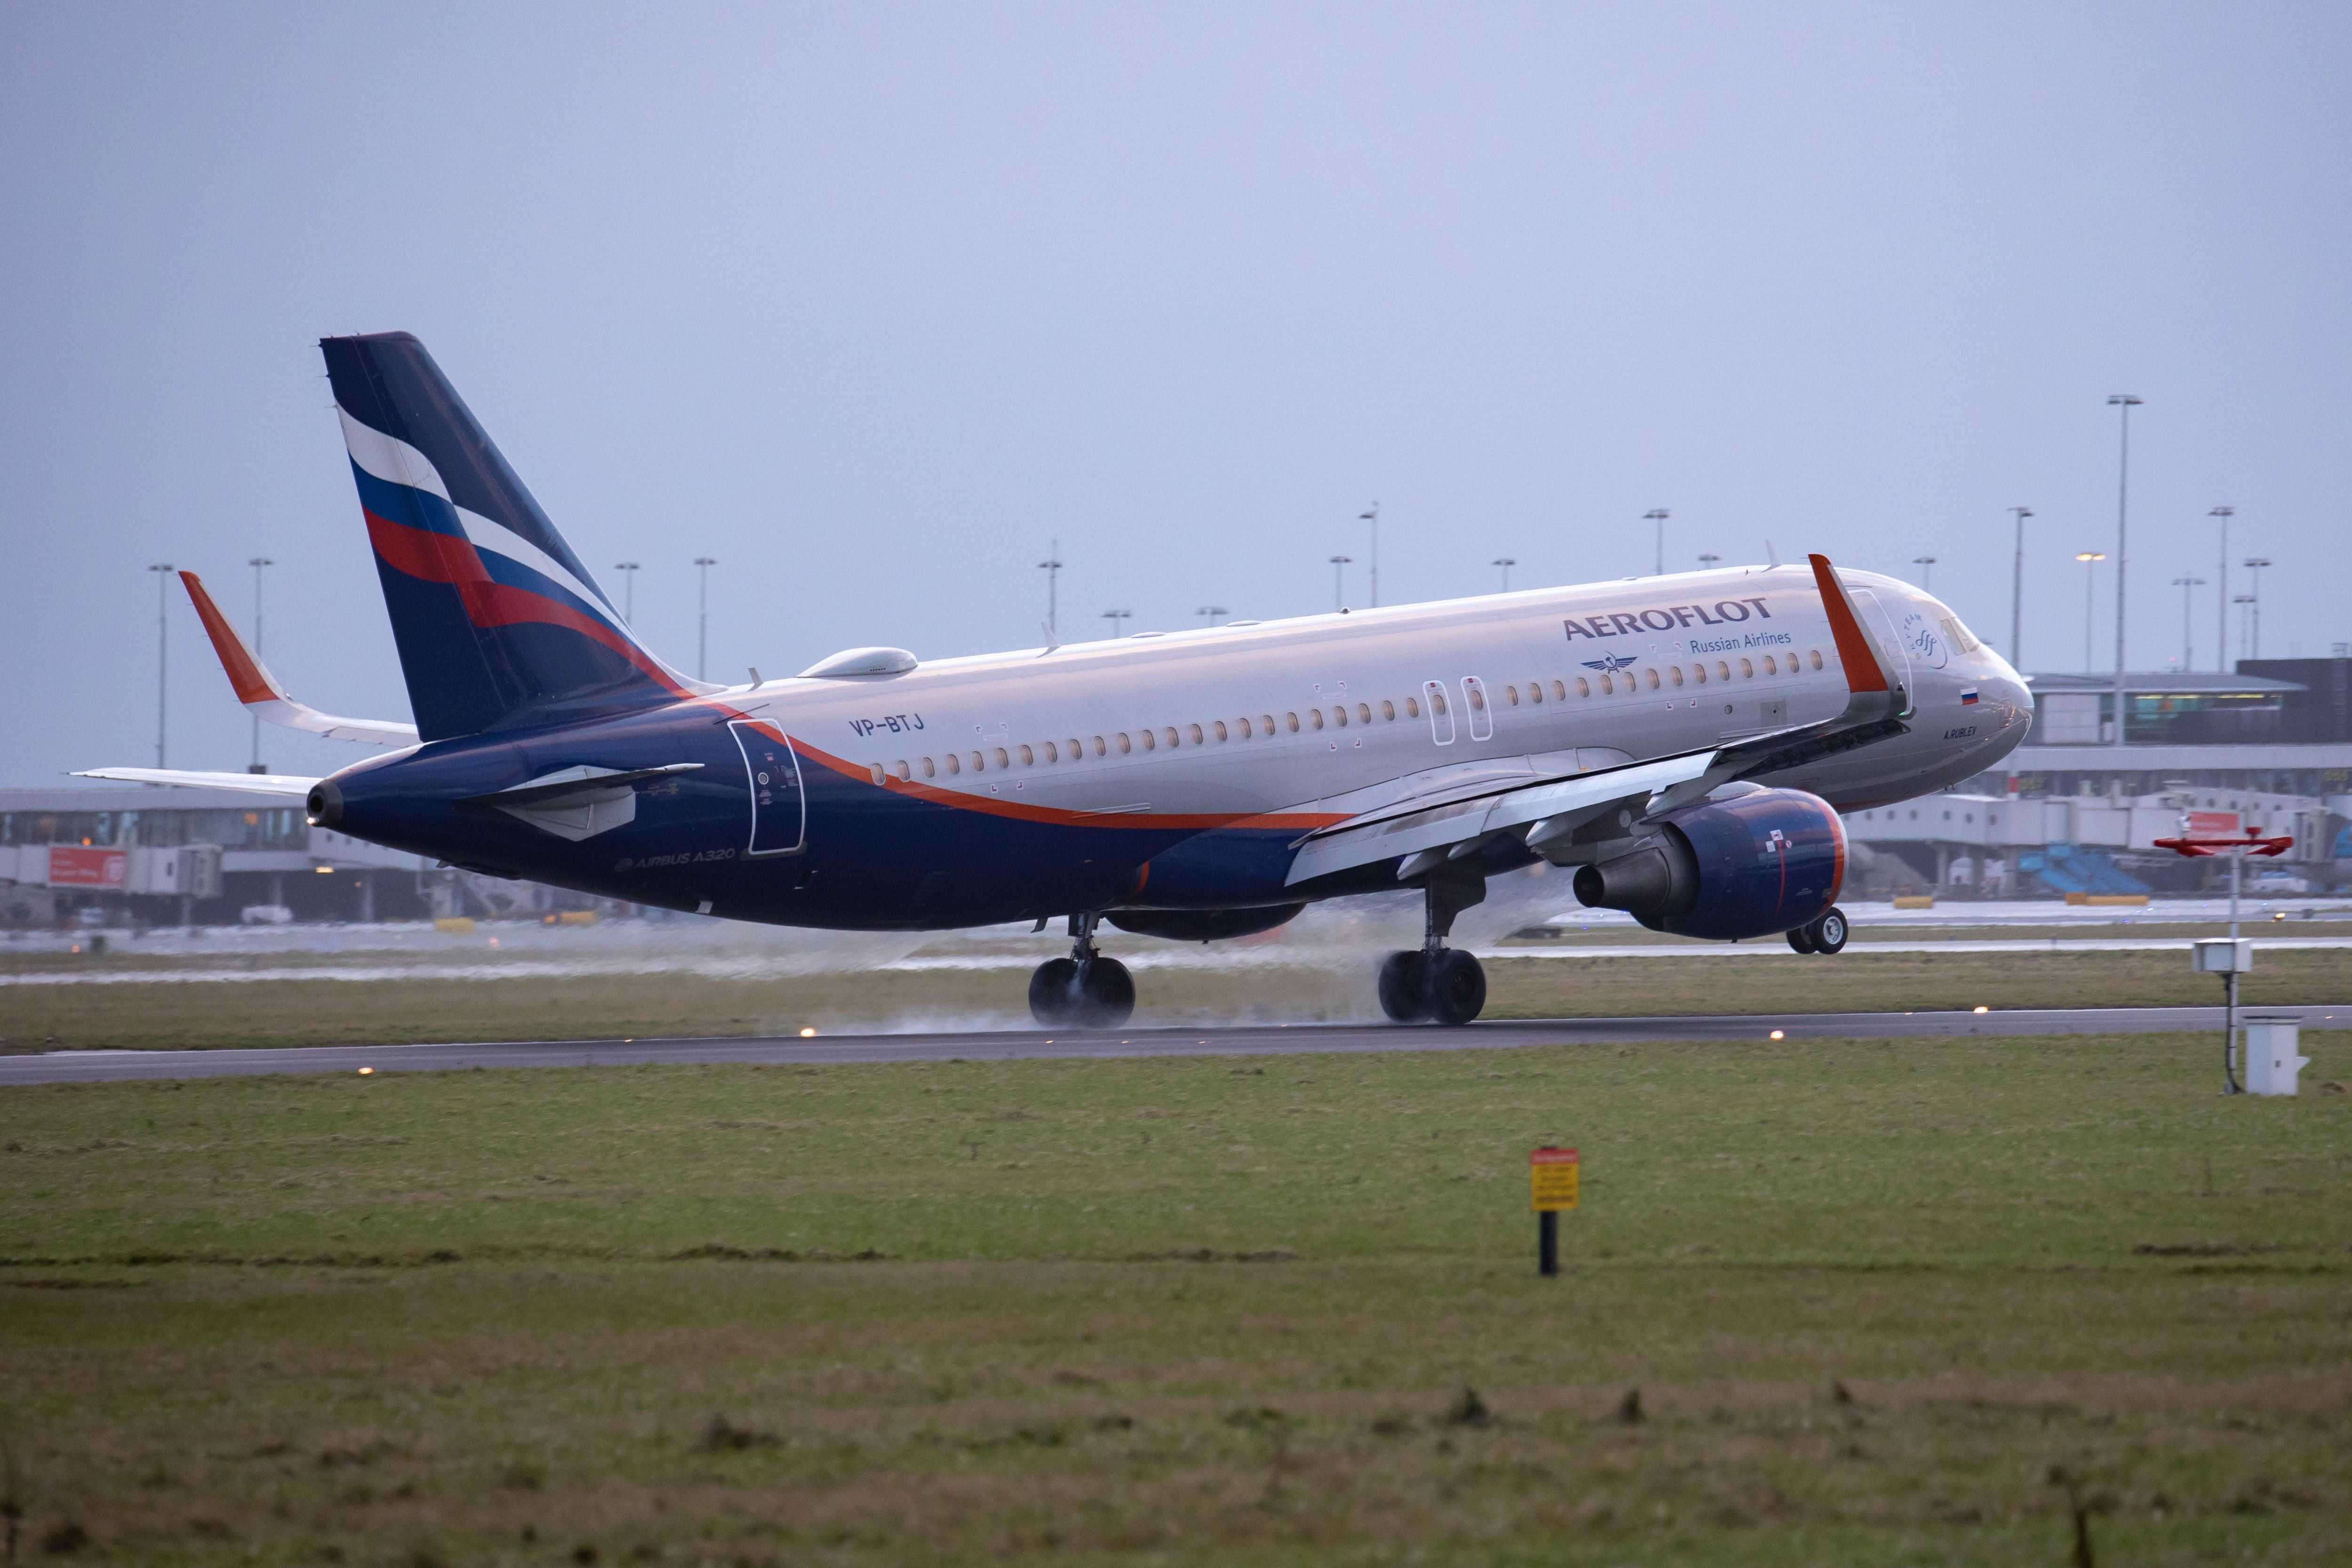 Aeroflot - Aeroflot Airbus A320 aircraft on final approach flight and landing on the runway at Amsterdam Schiphol Airport